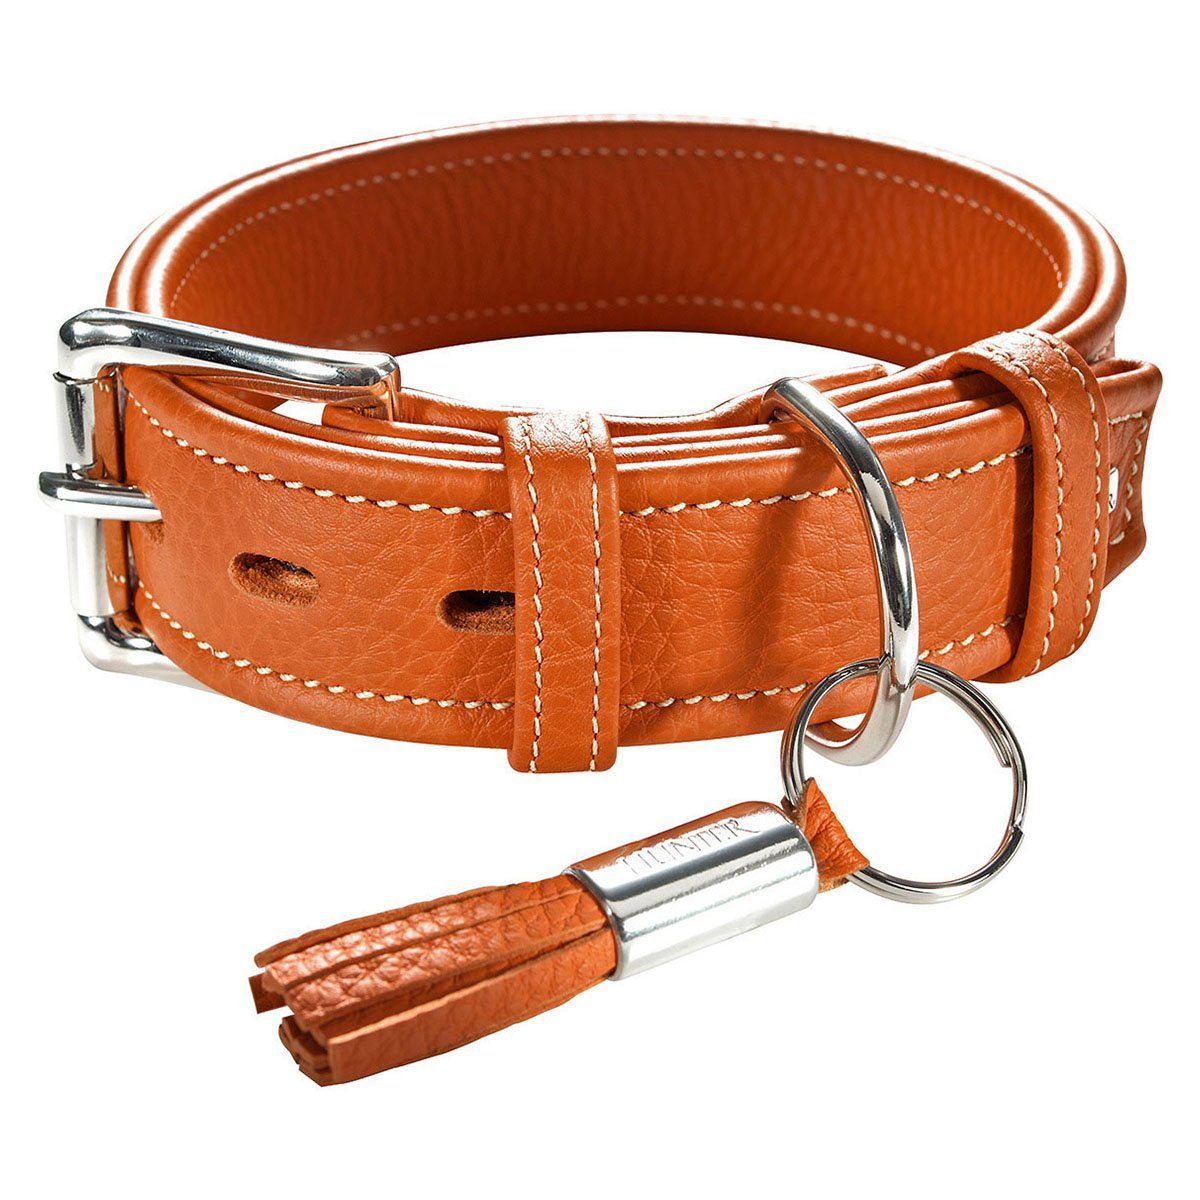 Hunter Tierbedarf Hunde-Halsband Halsband Cannes orange